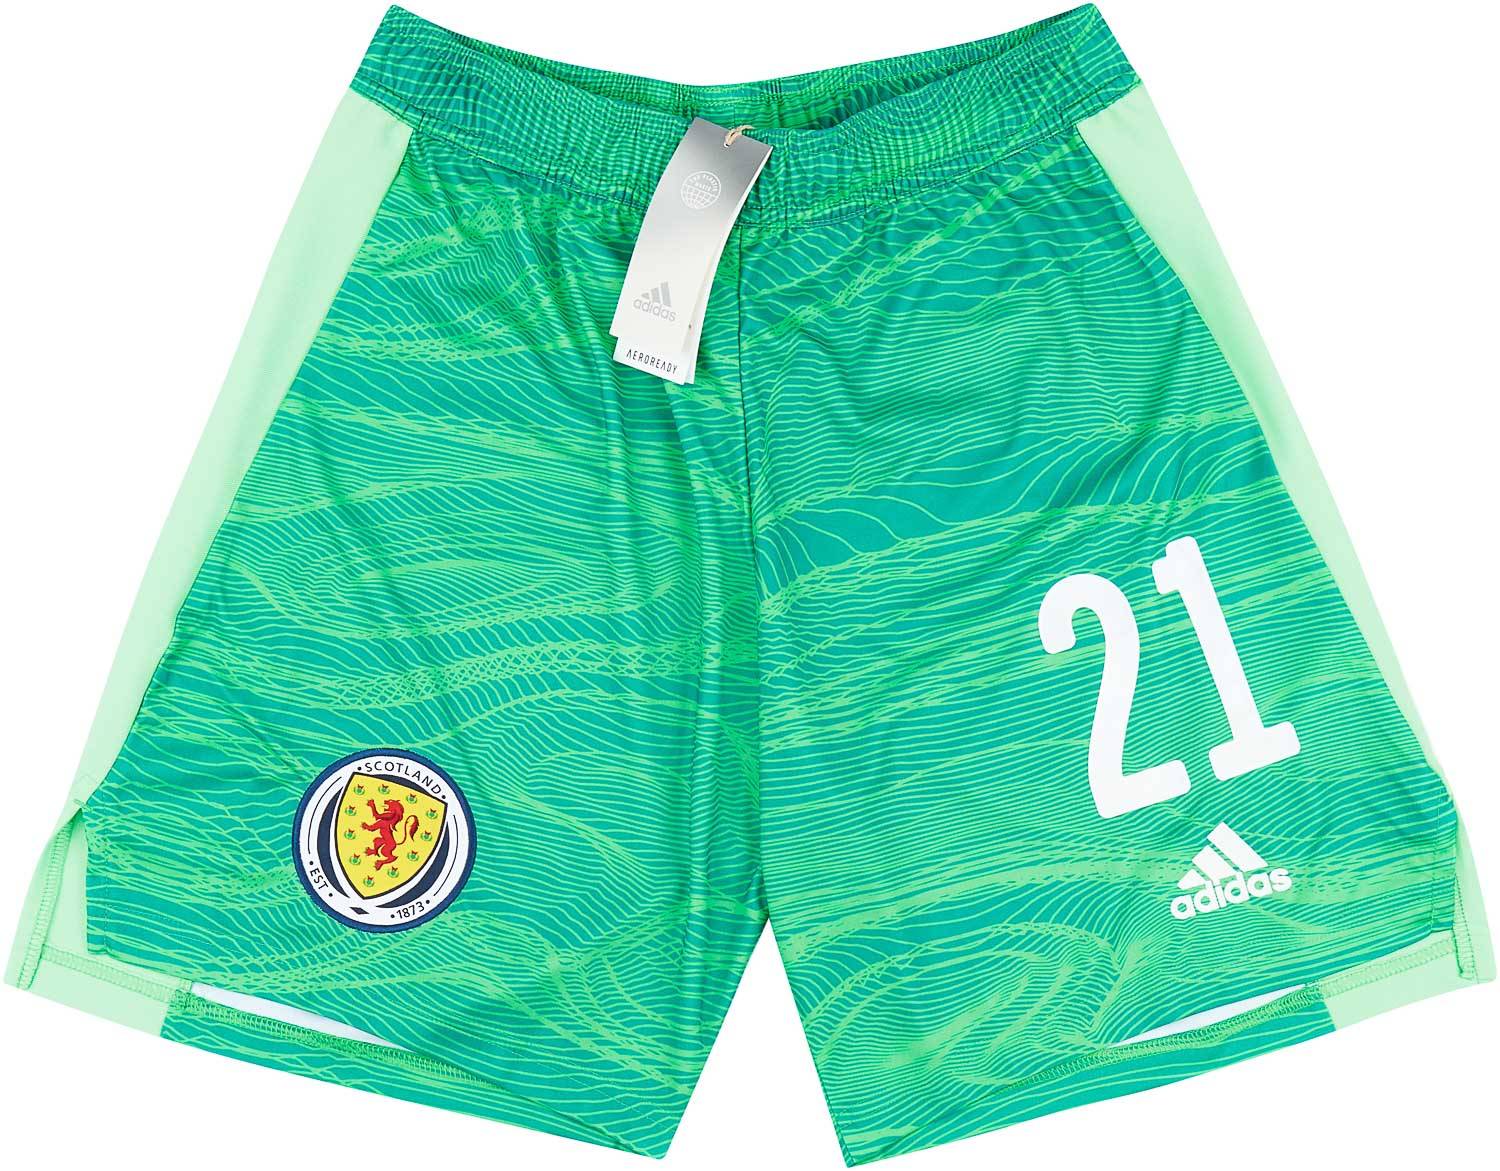 2021-22 Scotland Player Issue GK Shorts #21 M